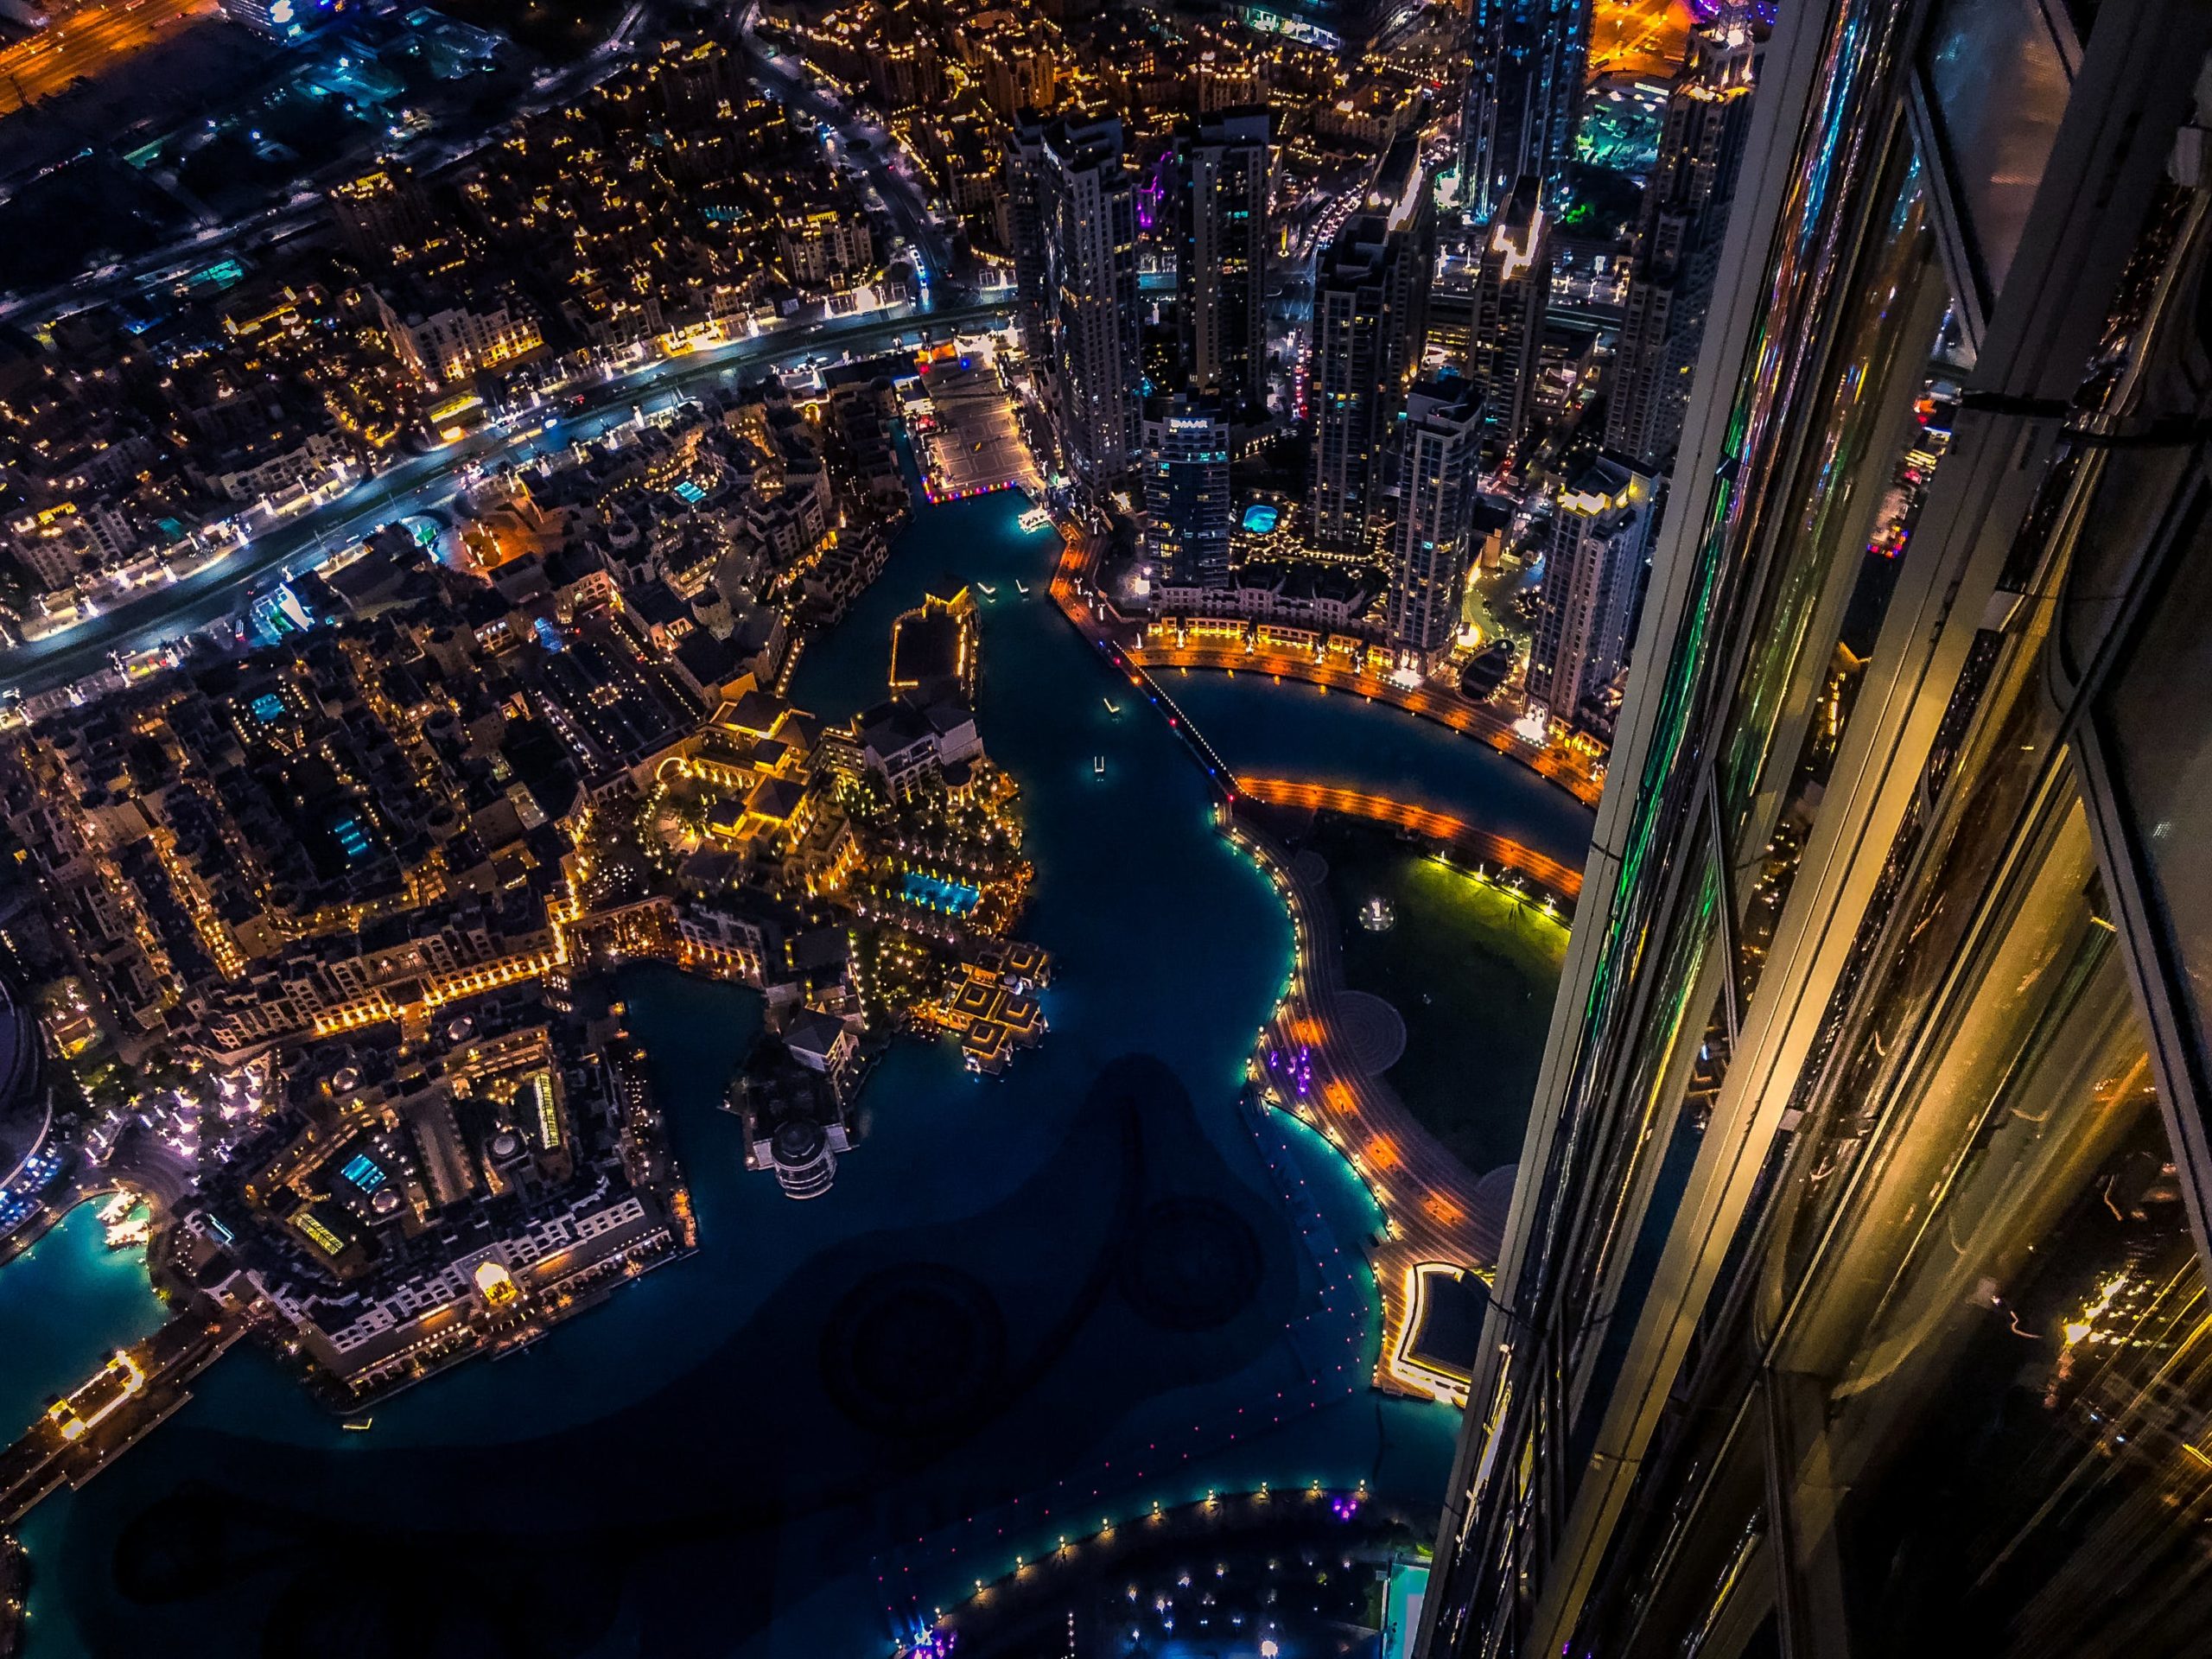 A beautiful view of Dubai at night